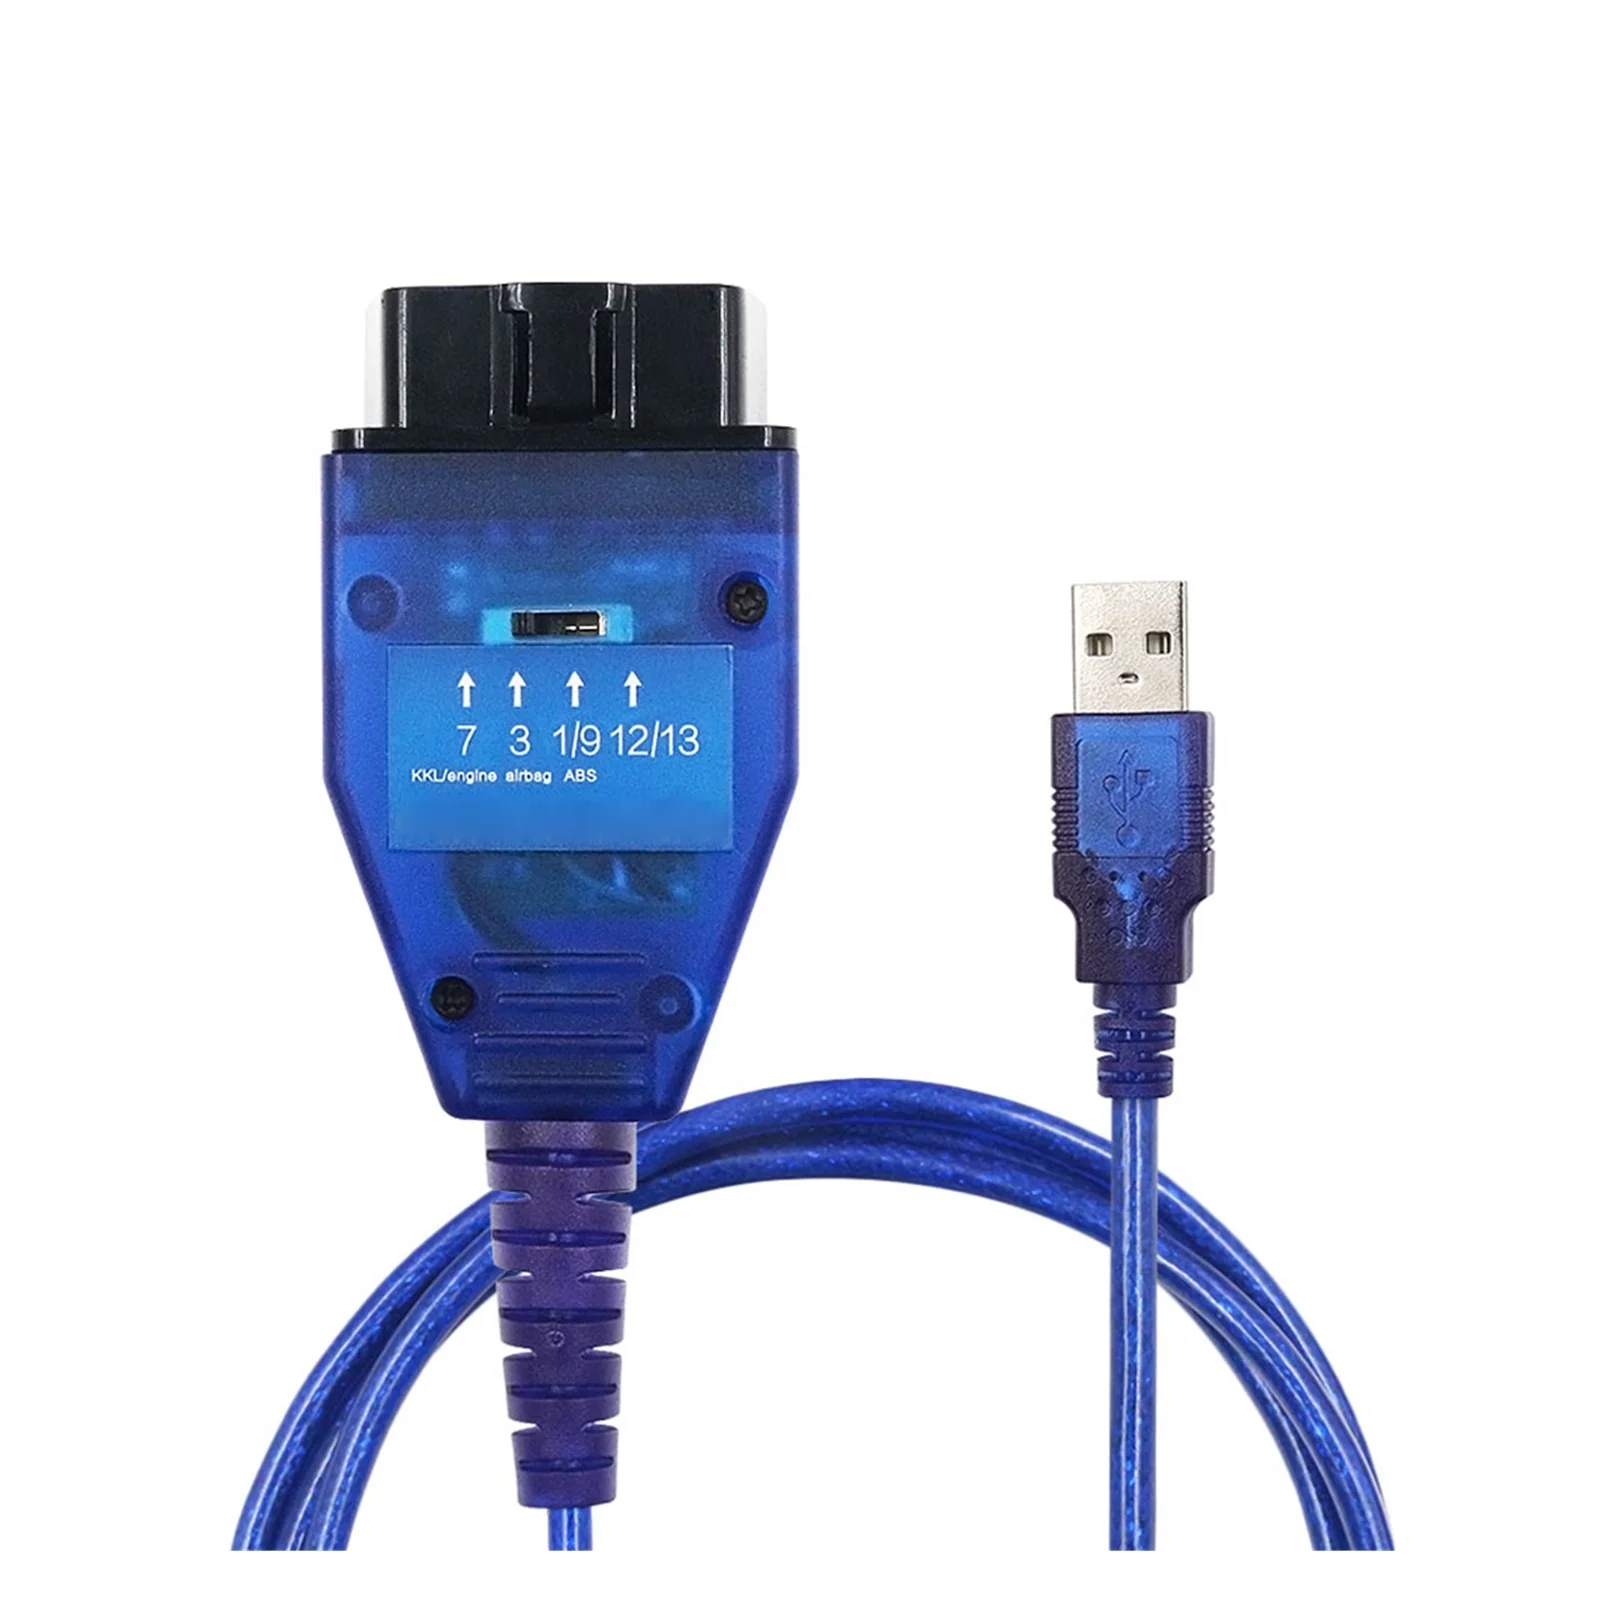 

2022 new FT232RL USB With Switched OBD2 Diagnostic Cable For VAG KKL 409 Car ECU Scan Tool OBD External Equipment